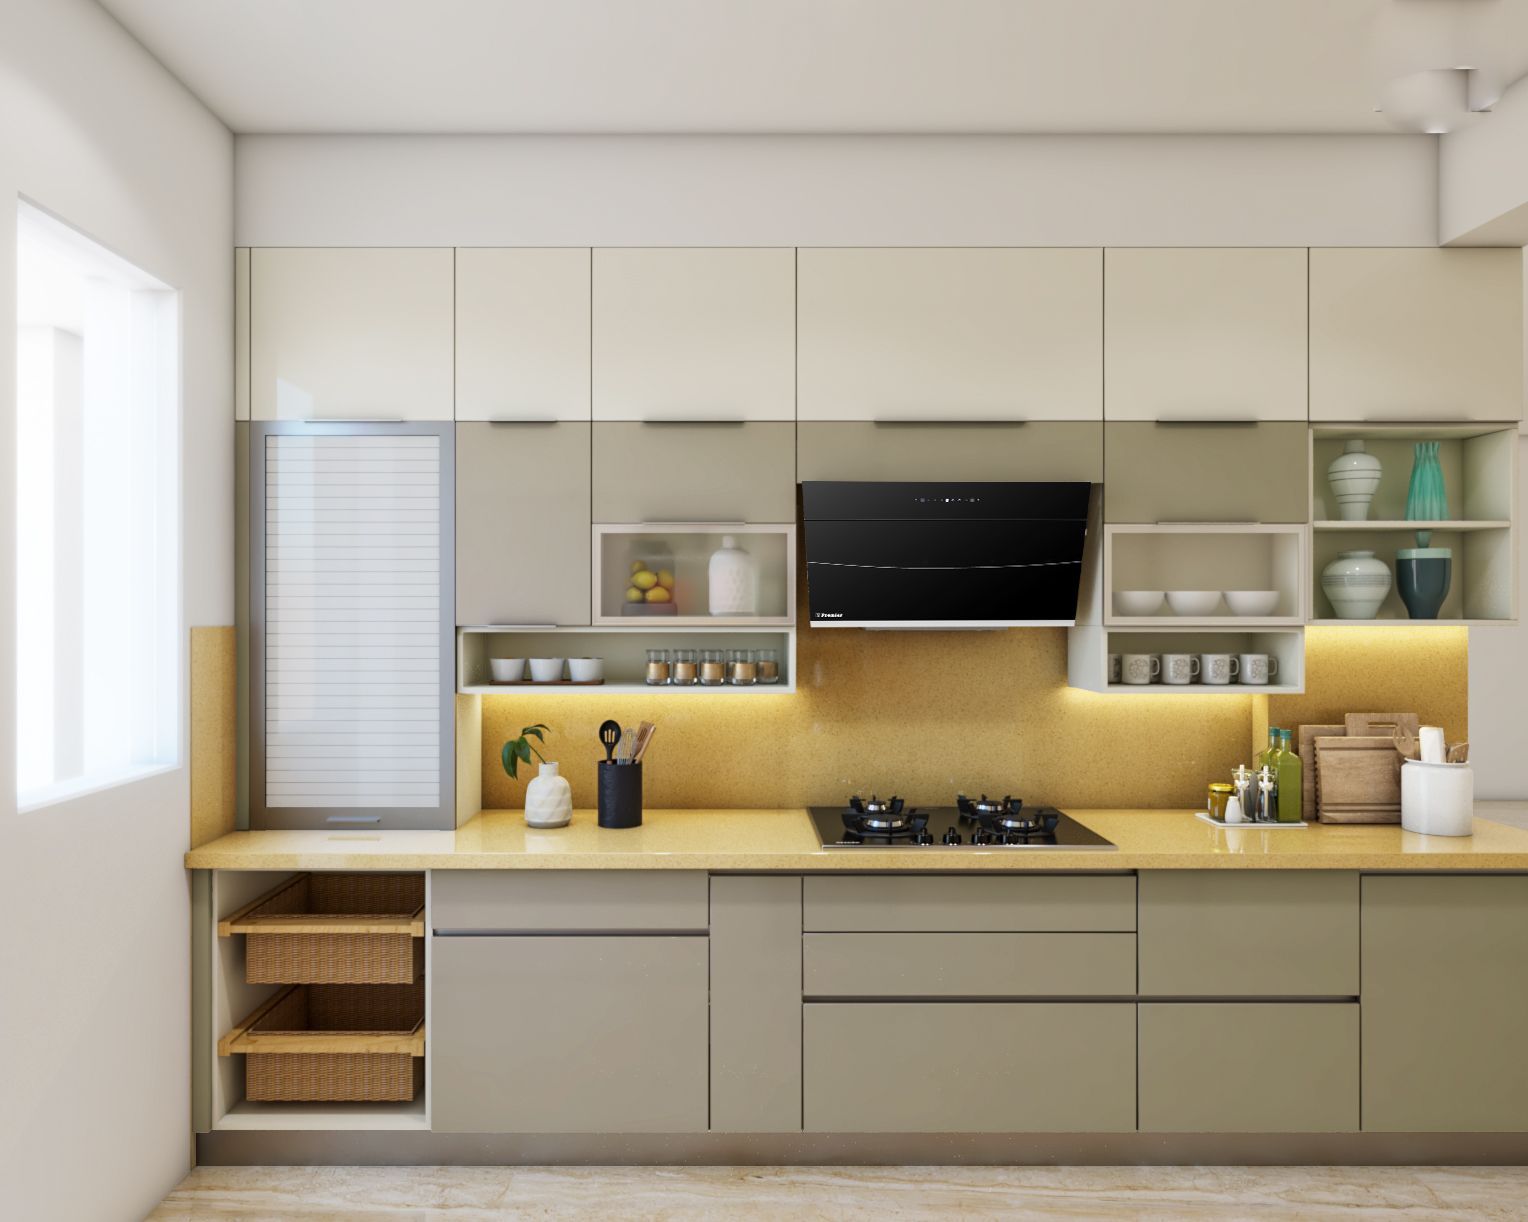 Contemporary Modular Kitchen Design With Work Triangle